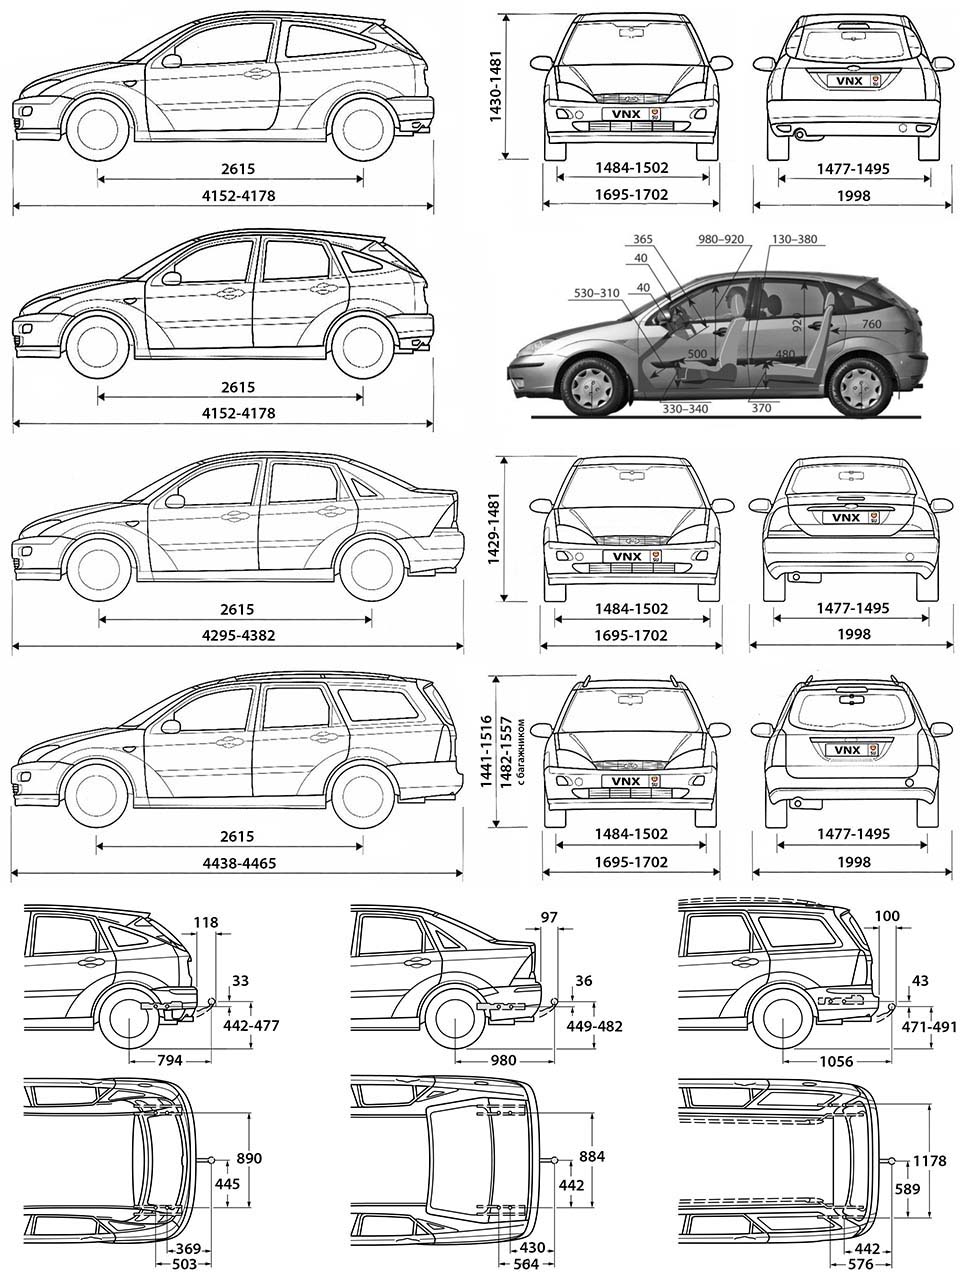 Габаритные размеры Форд Фокус (dimensions Ford Focus 1998-2004)